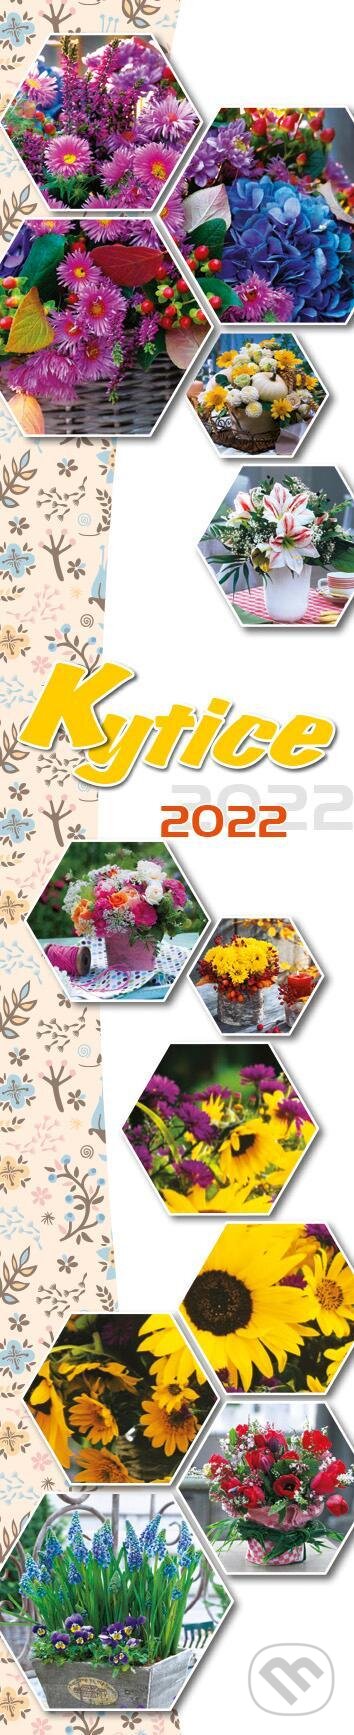 Kalendář 2022 - Kytice, nástěnný, BB/art, 2021